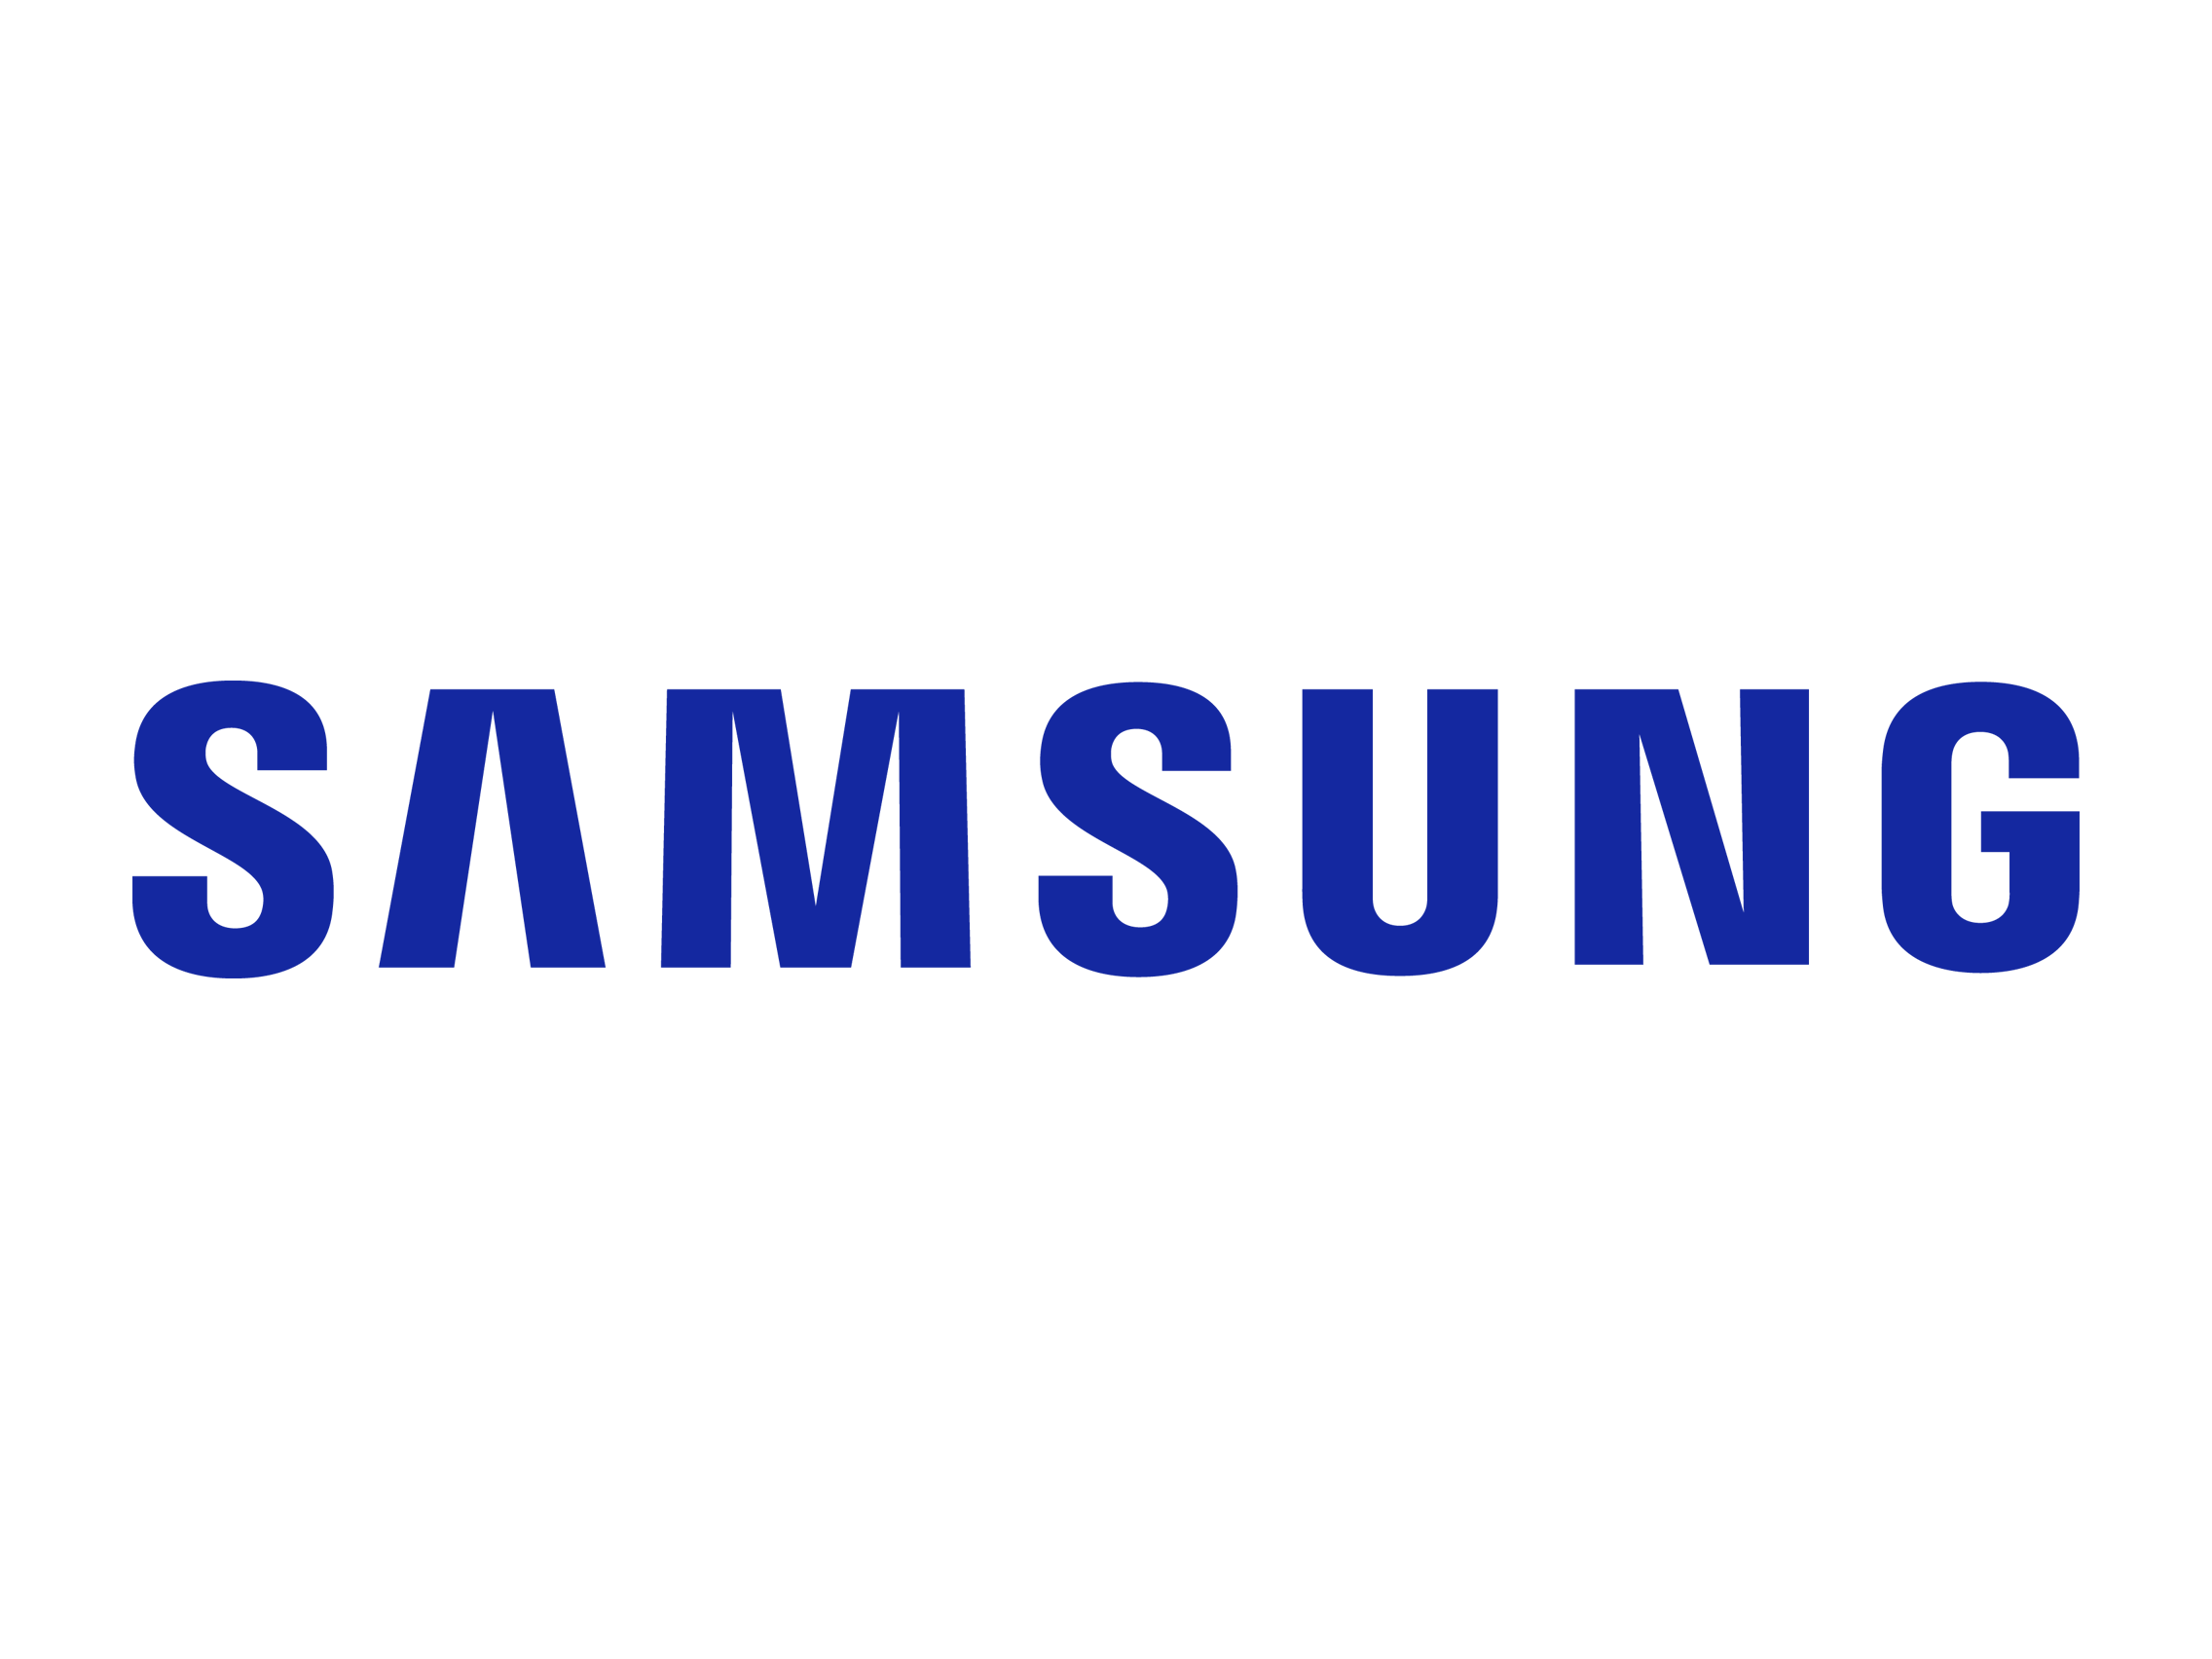 samsung galaxy tab s logo png